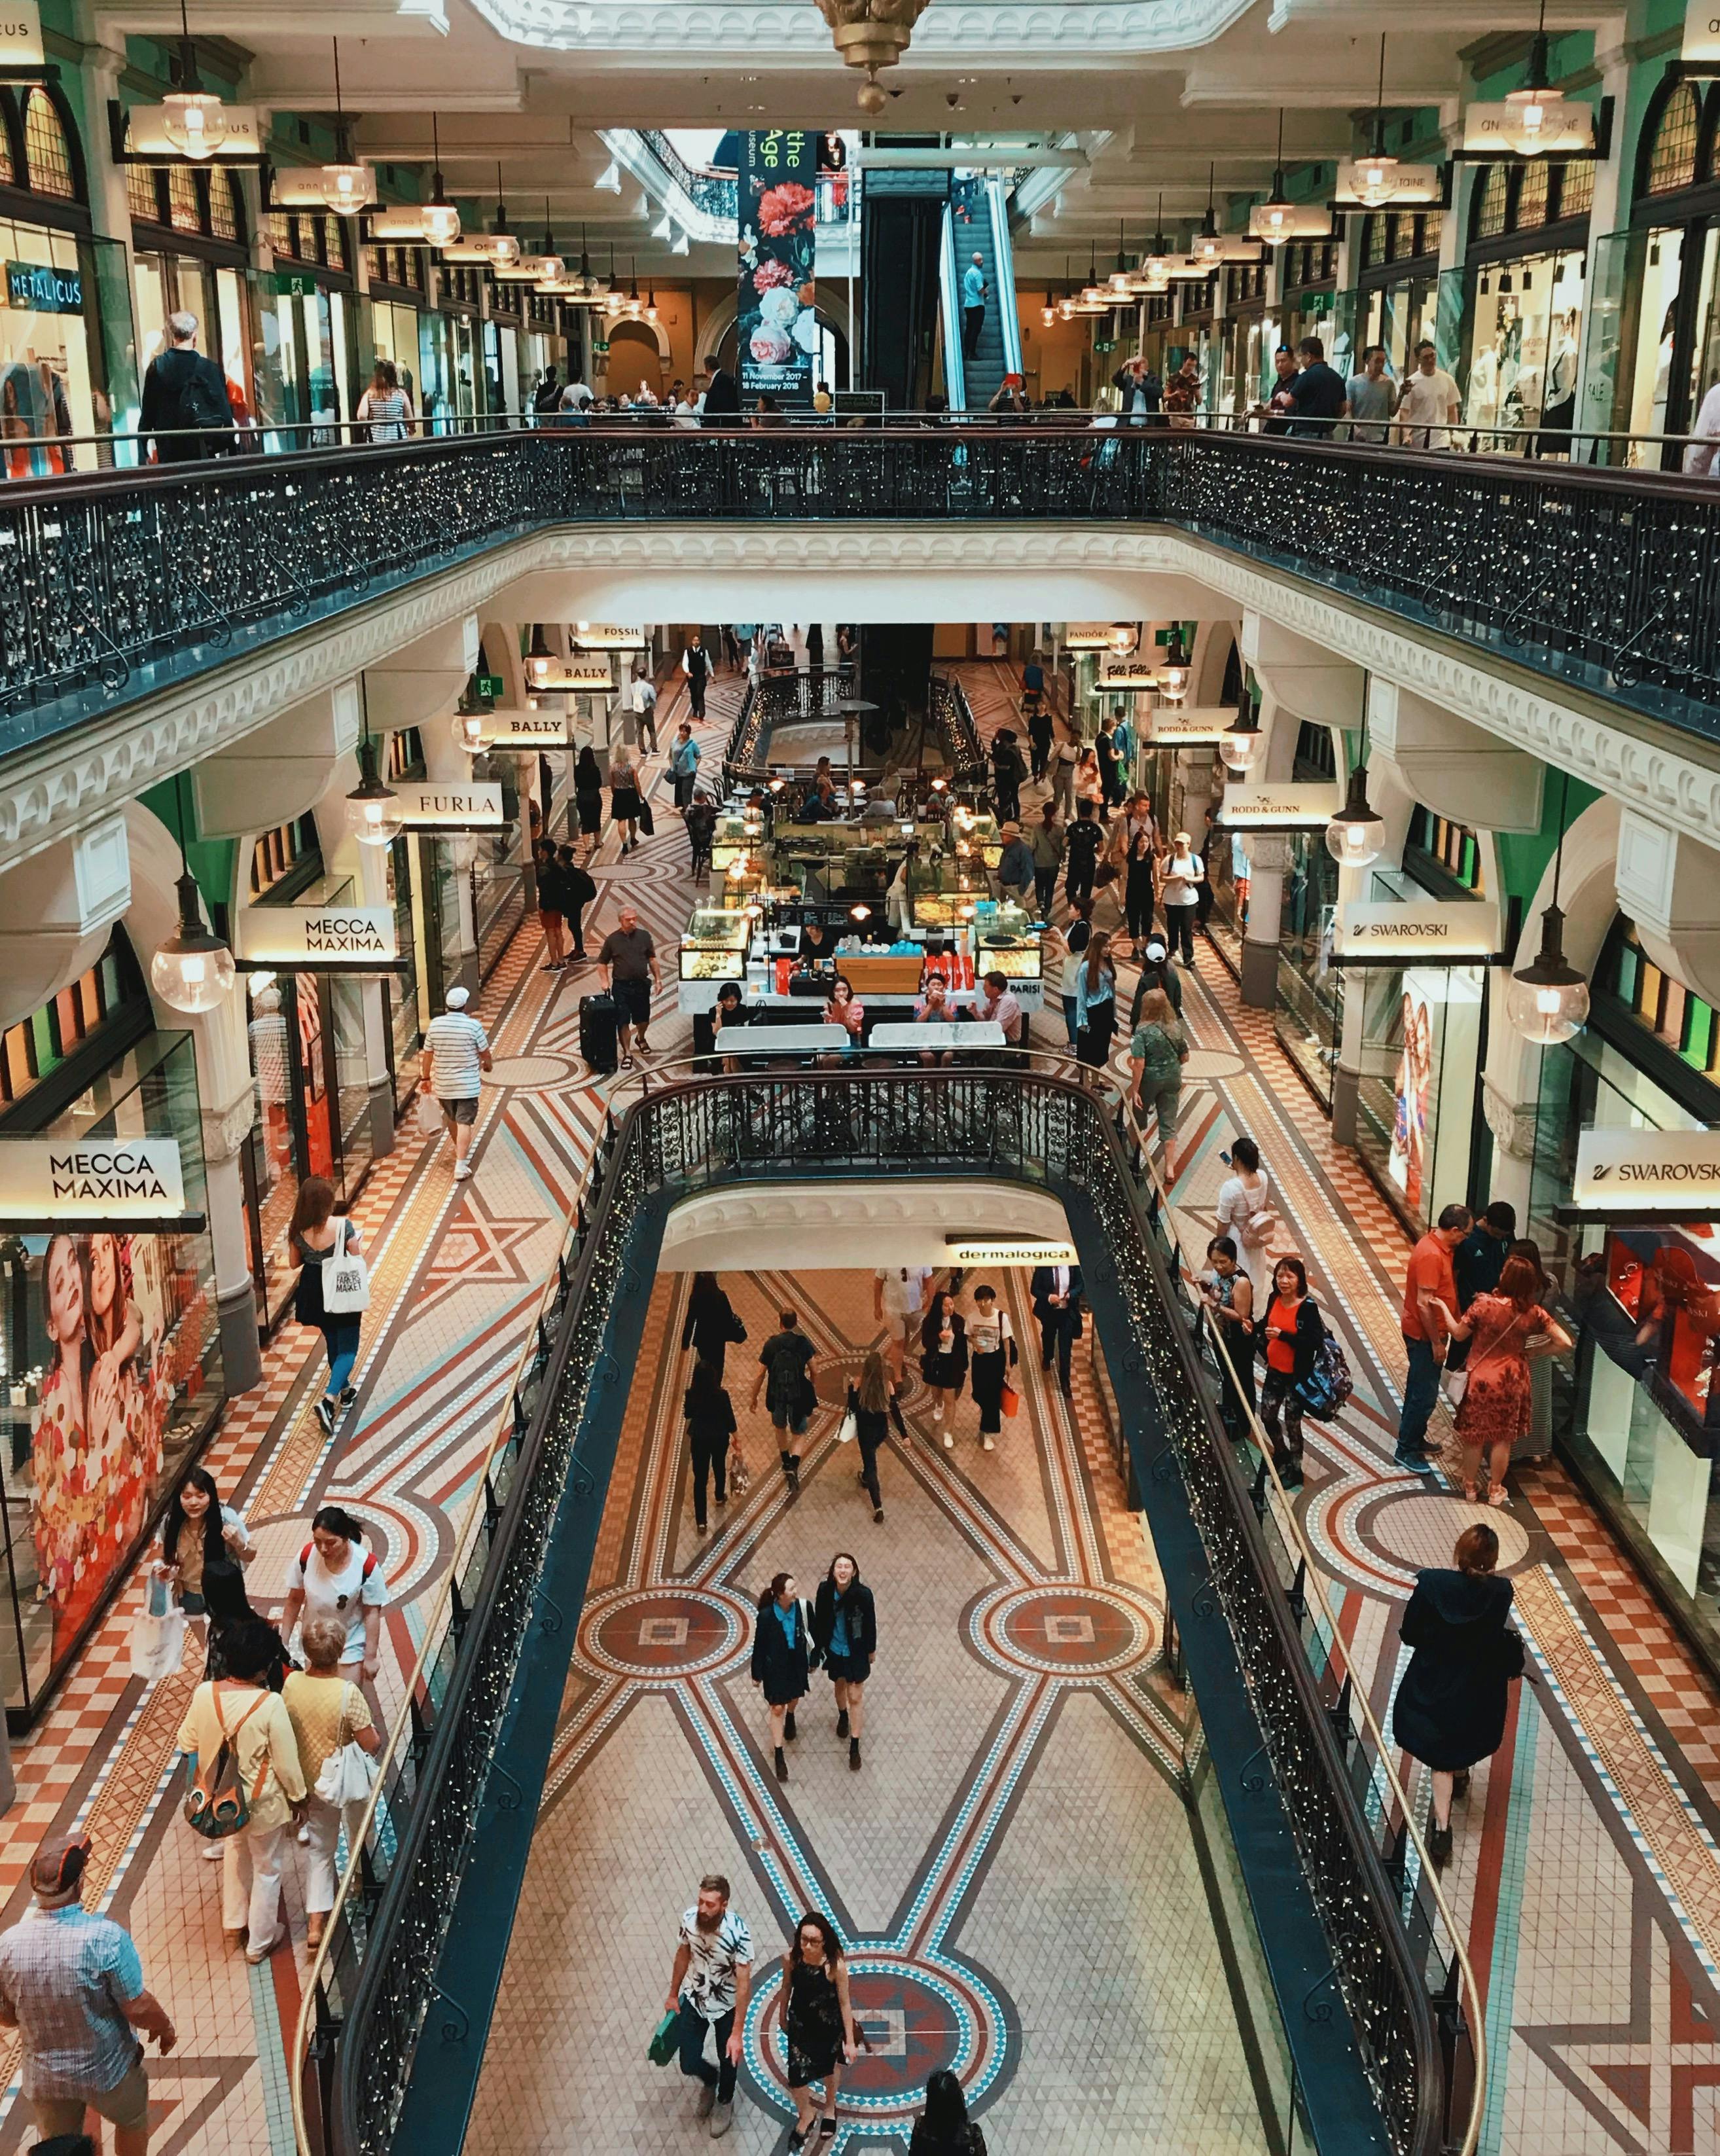 A group of people walking around a mall photo – Free Boston Image